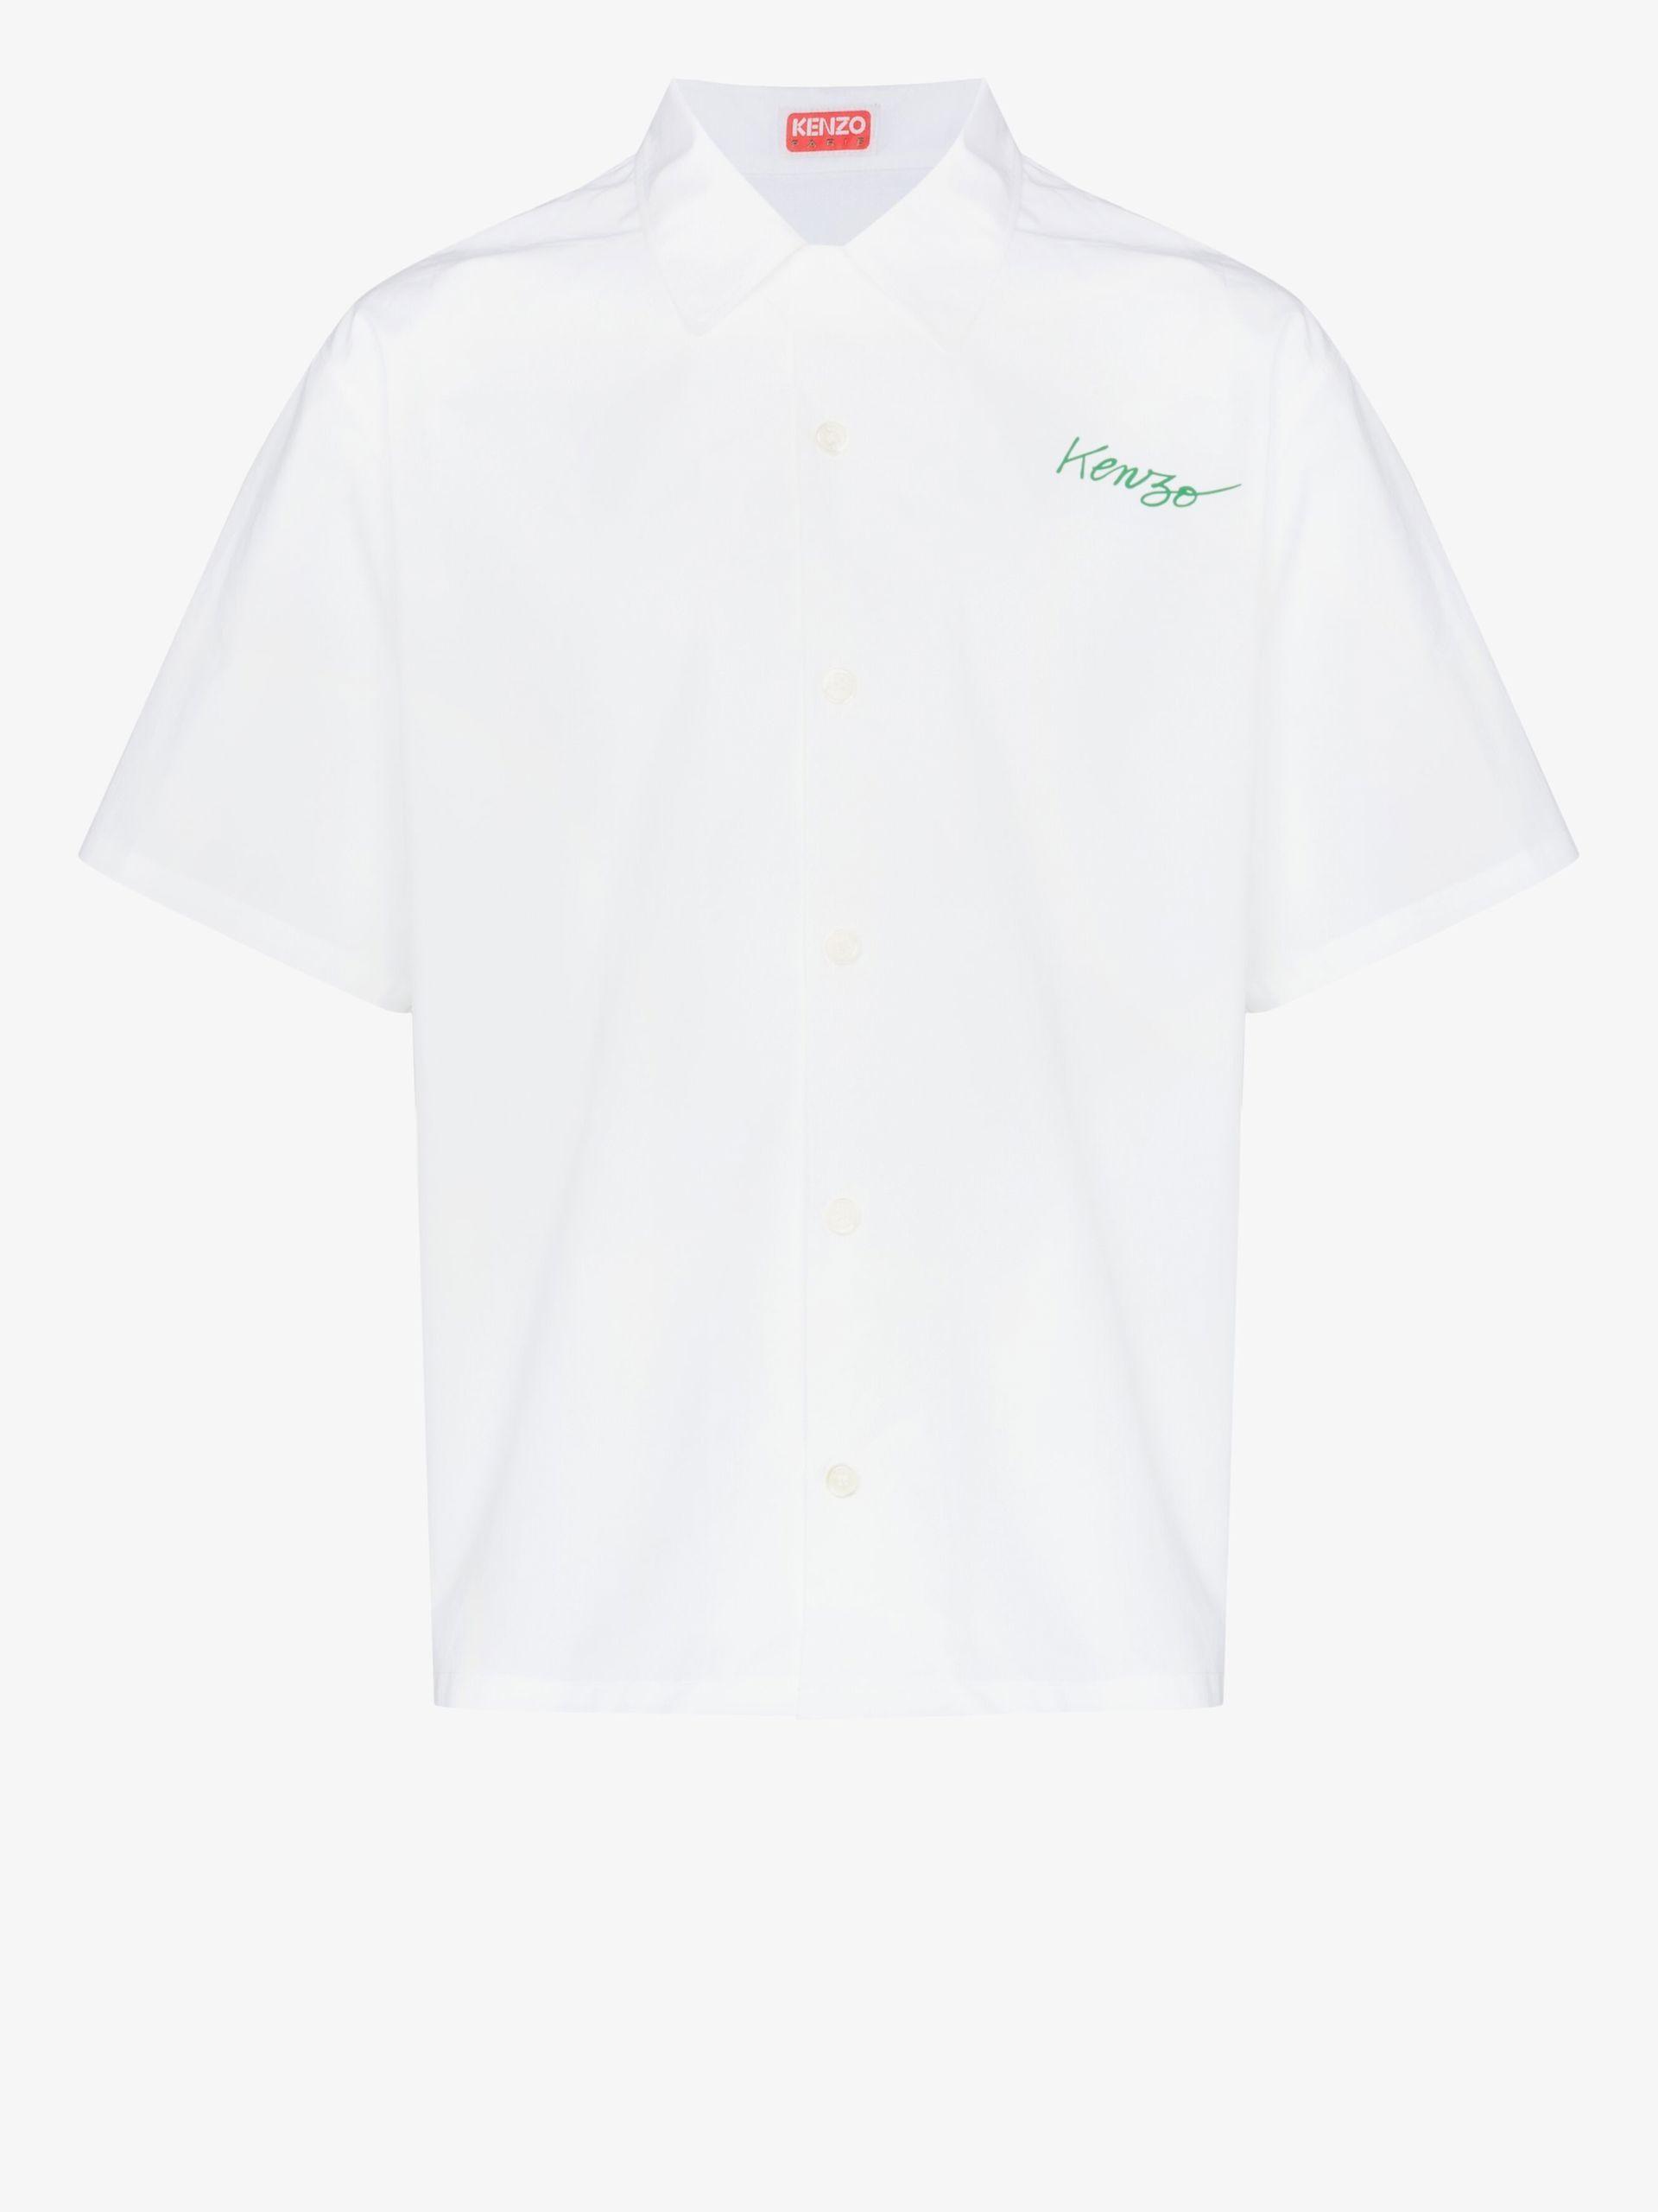 Kenzo Poppy Logo T-Shirt Sage Green . Men . M